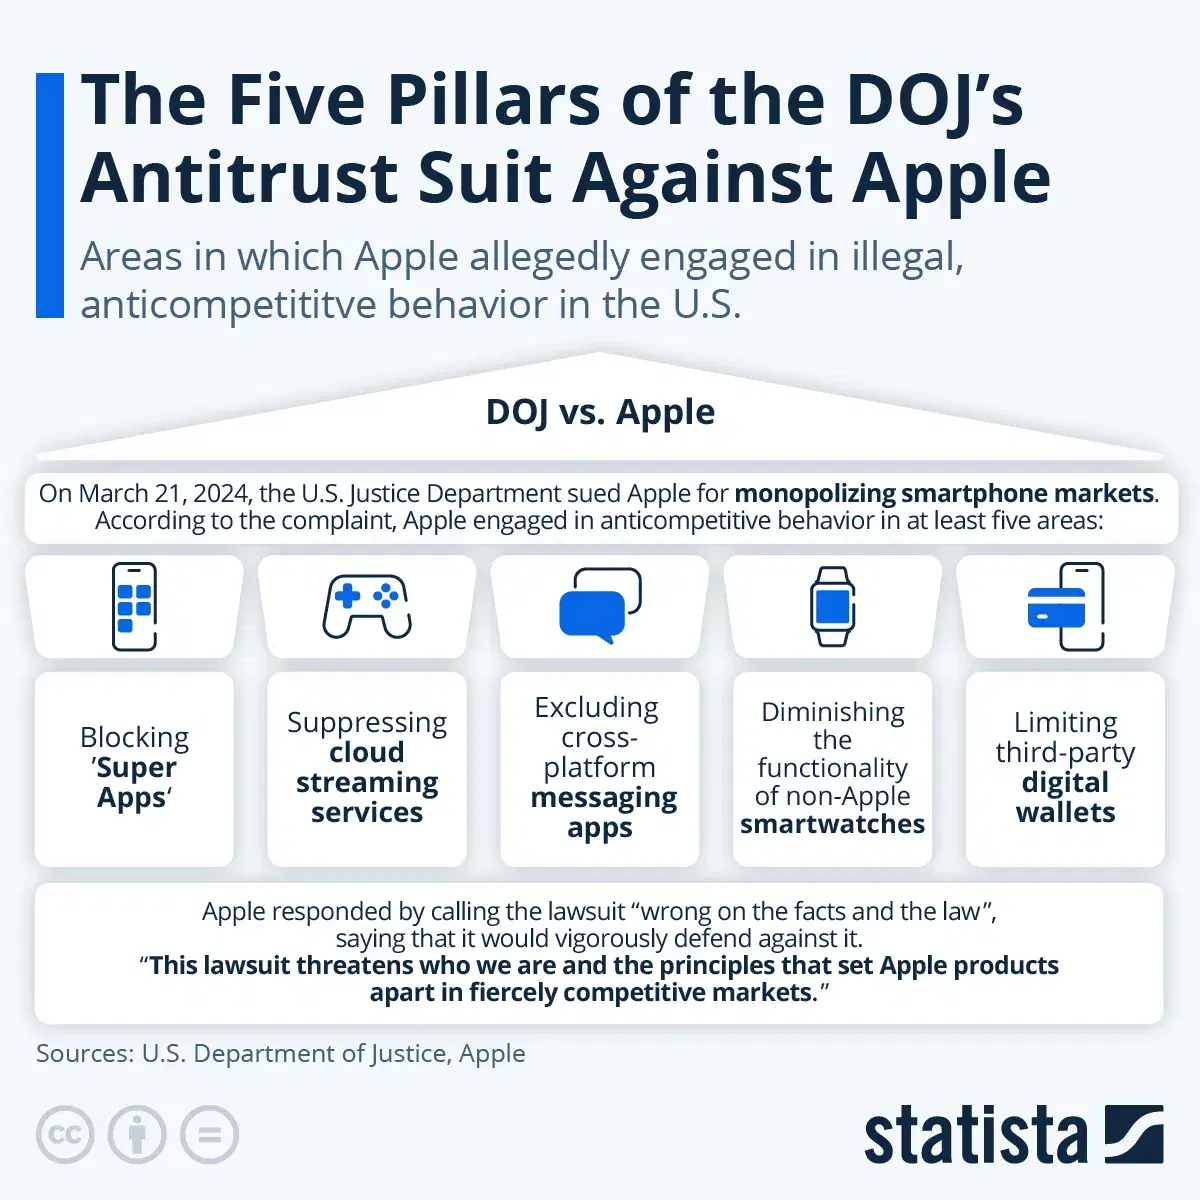 The Five Pillars of the DOJ's Antitrust Suit Against Apple